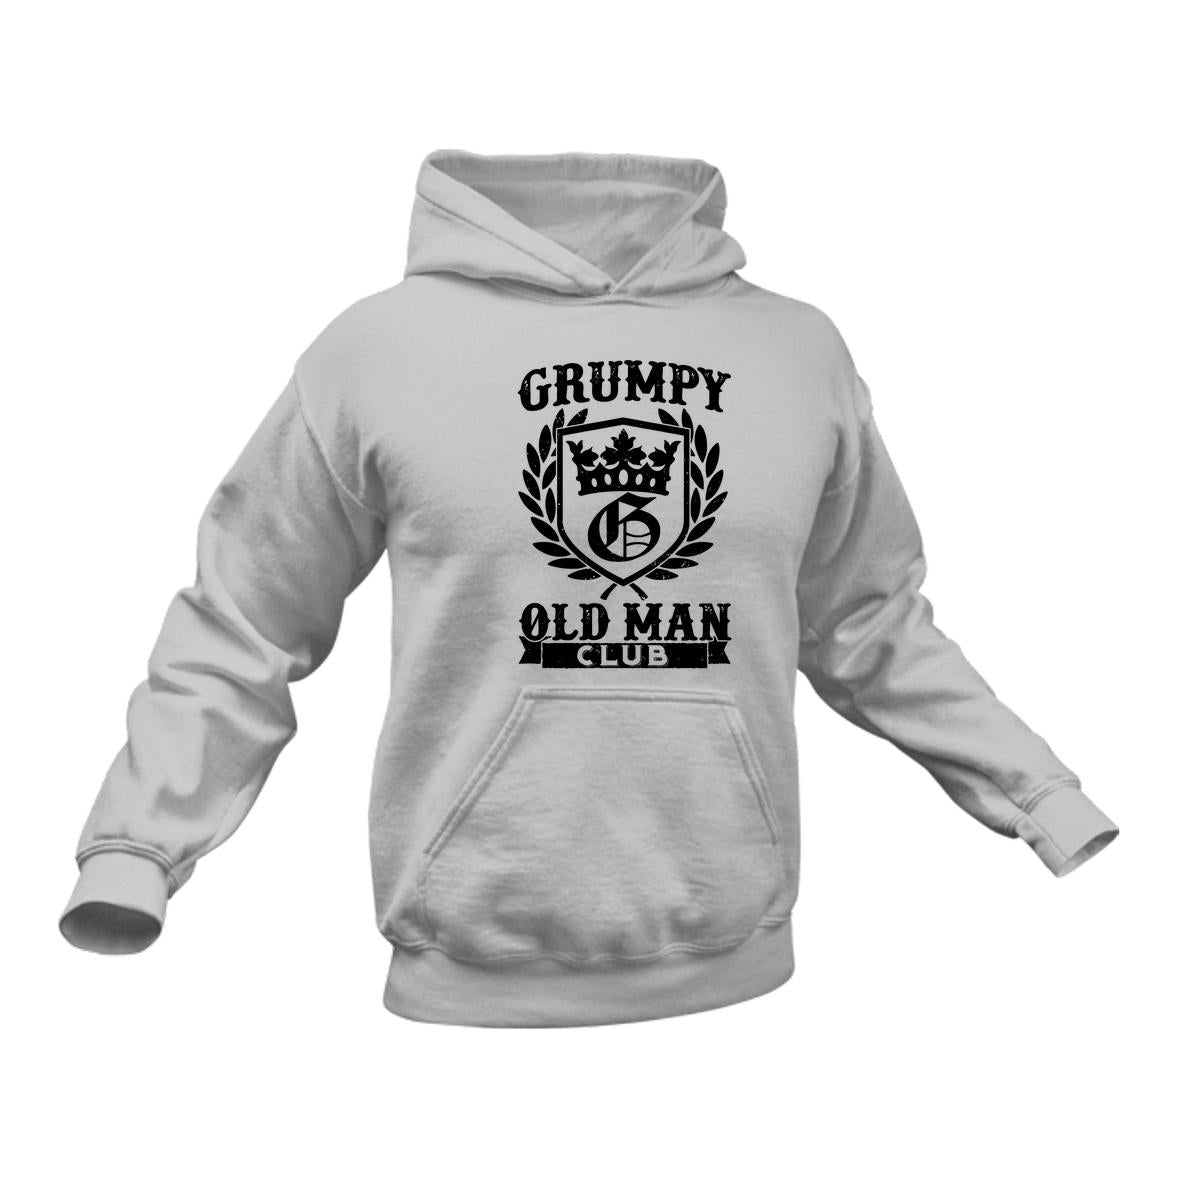 Grumpy Old Man Club Hoodie - Grumpy Old Man Gift, Gifts for Grumpy Man ...